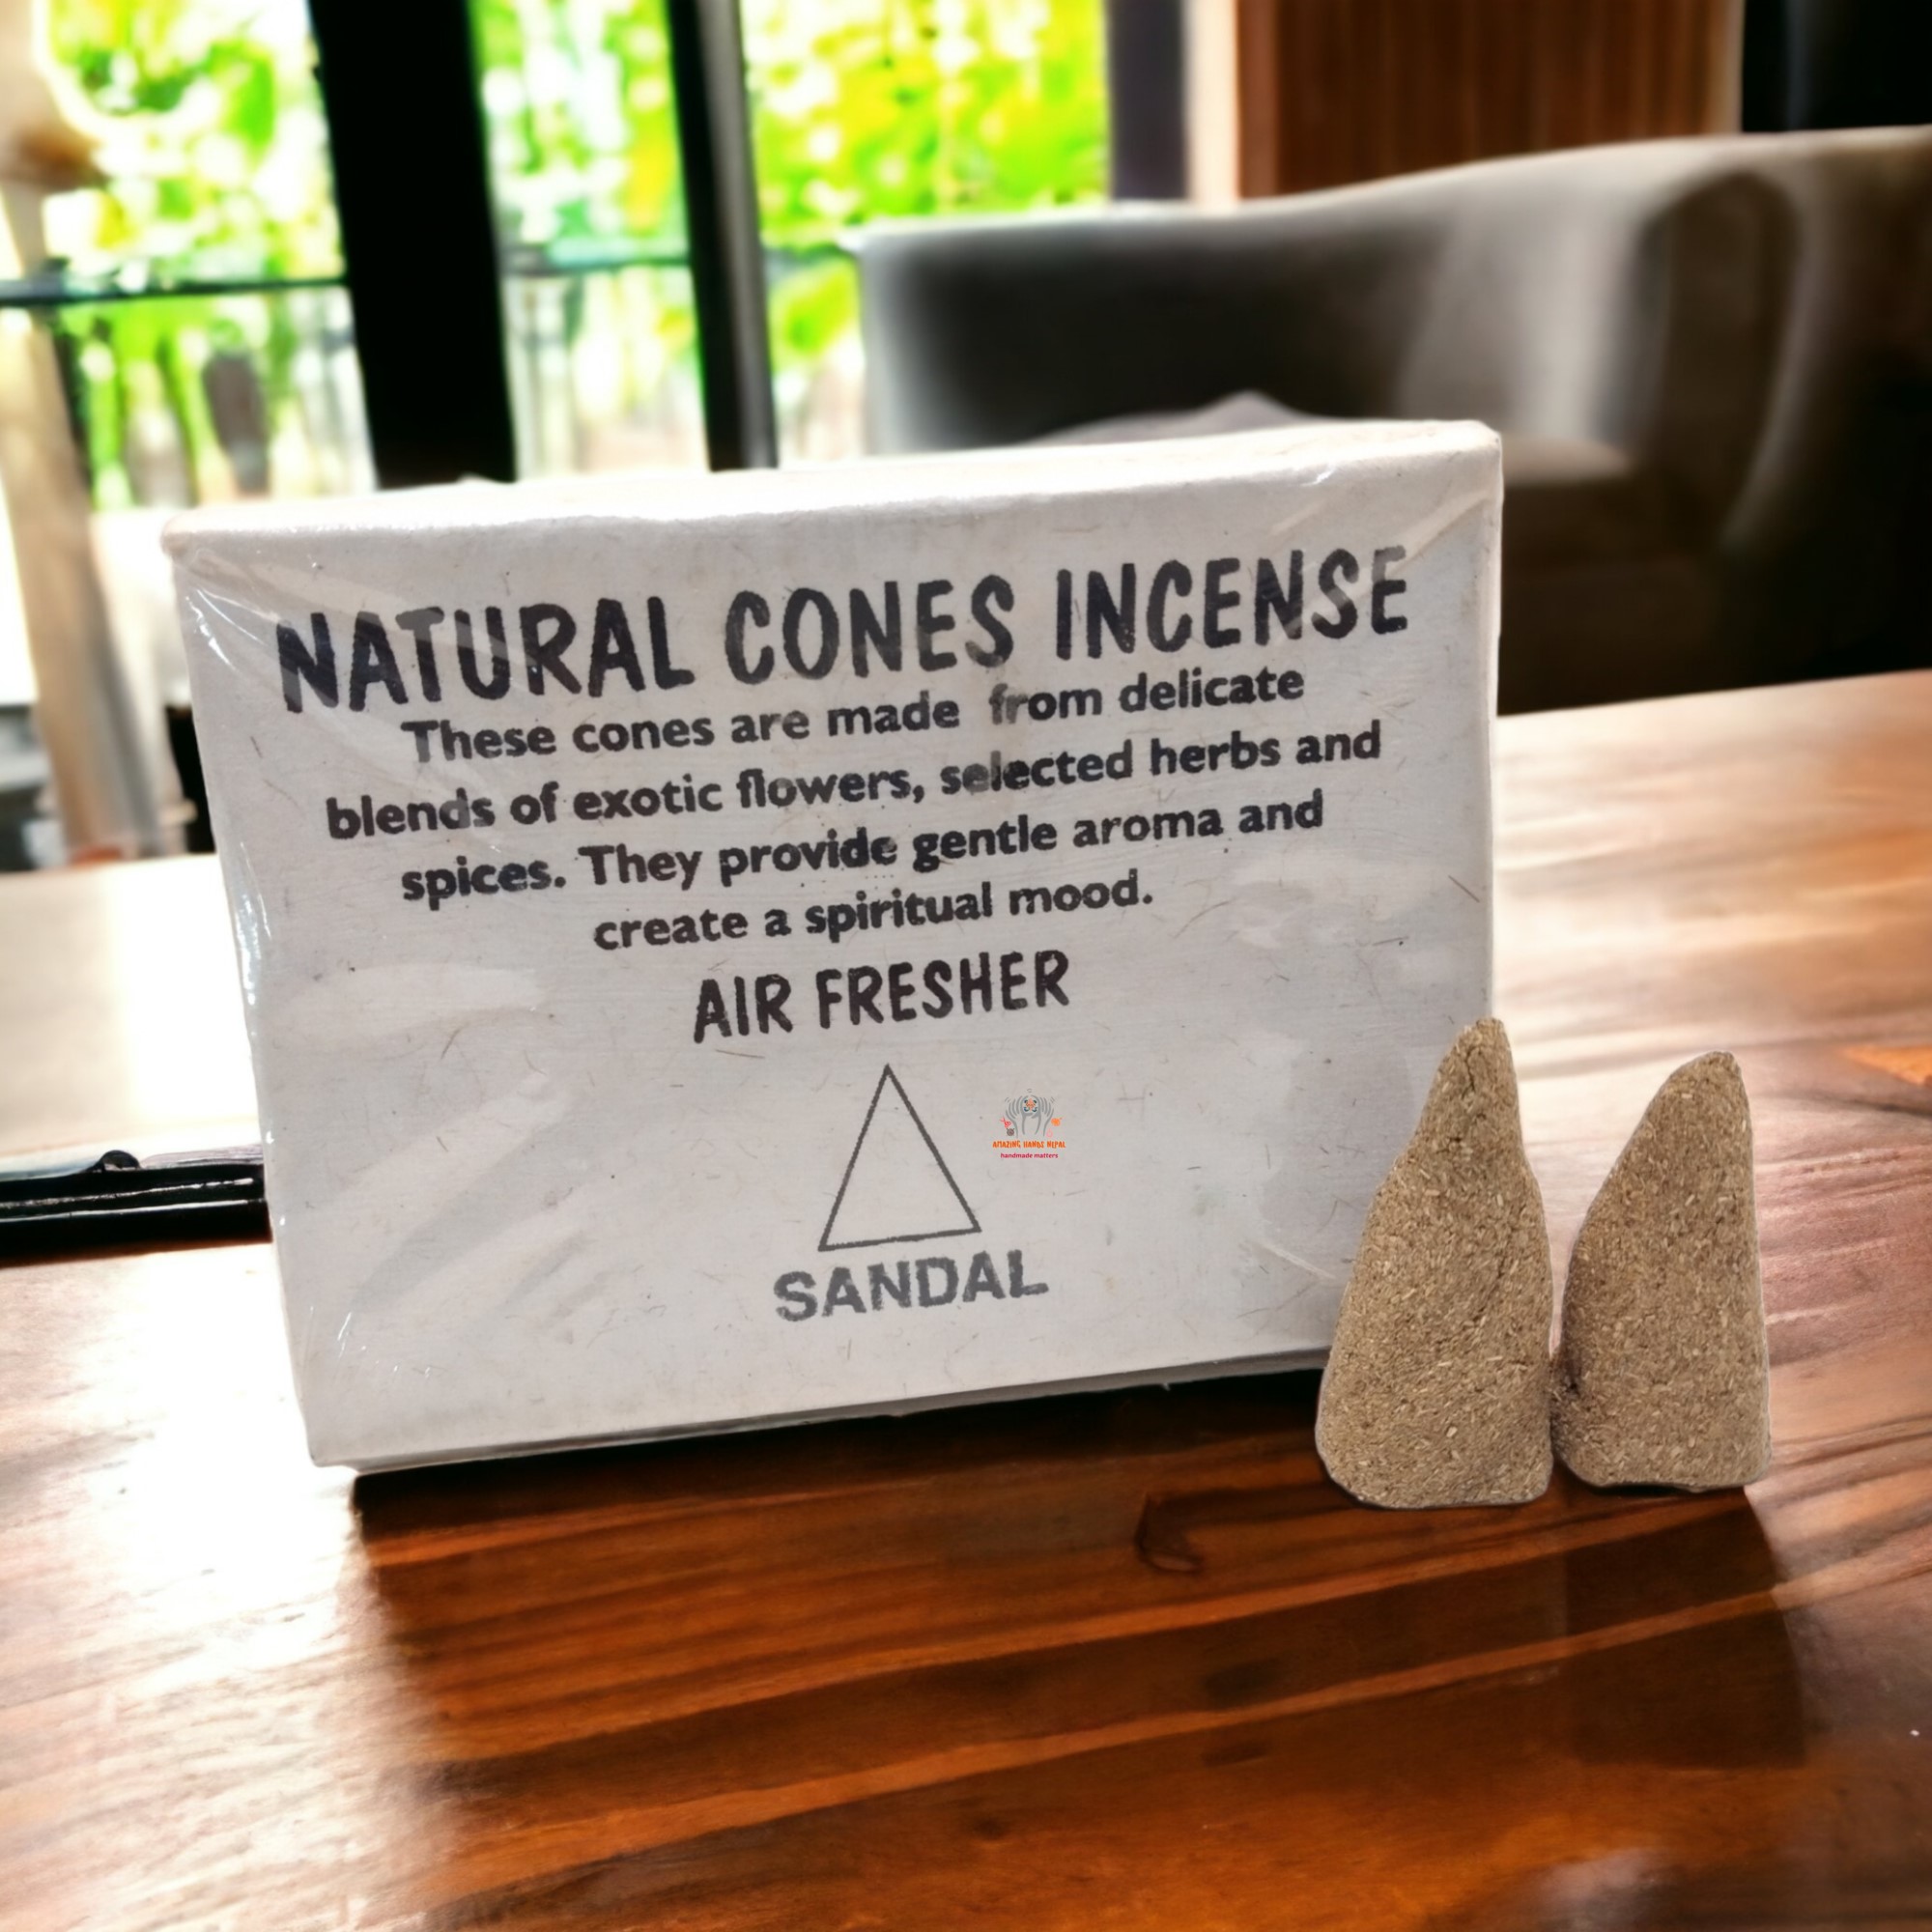 Natural Cones Incense